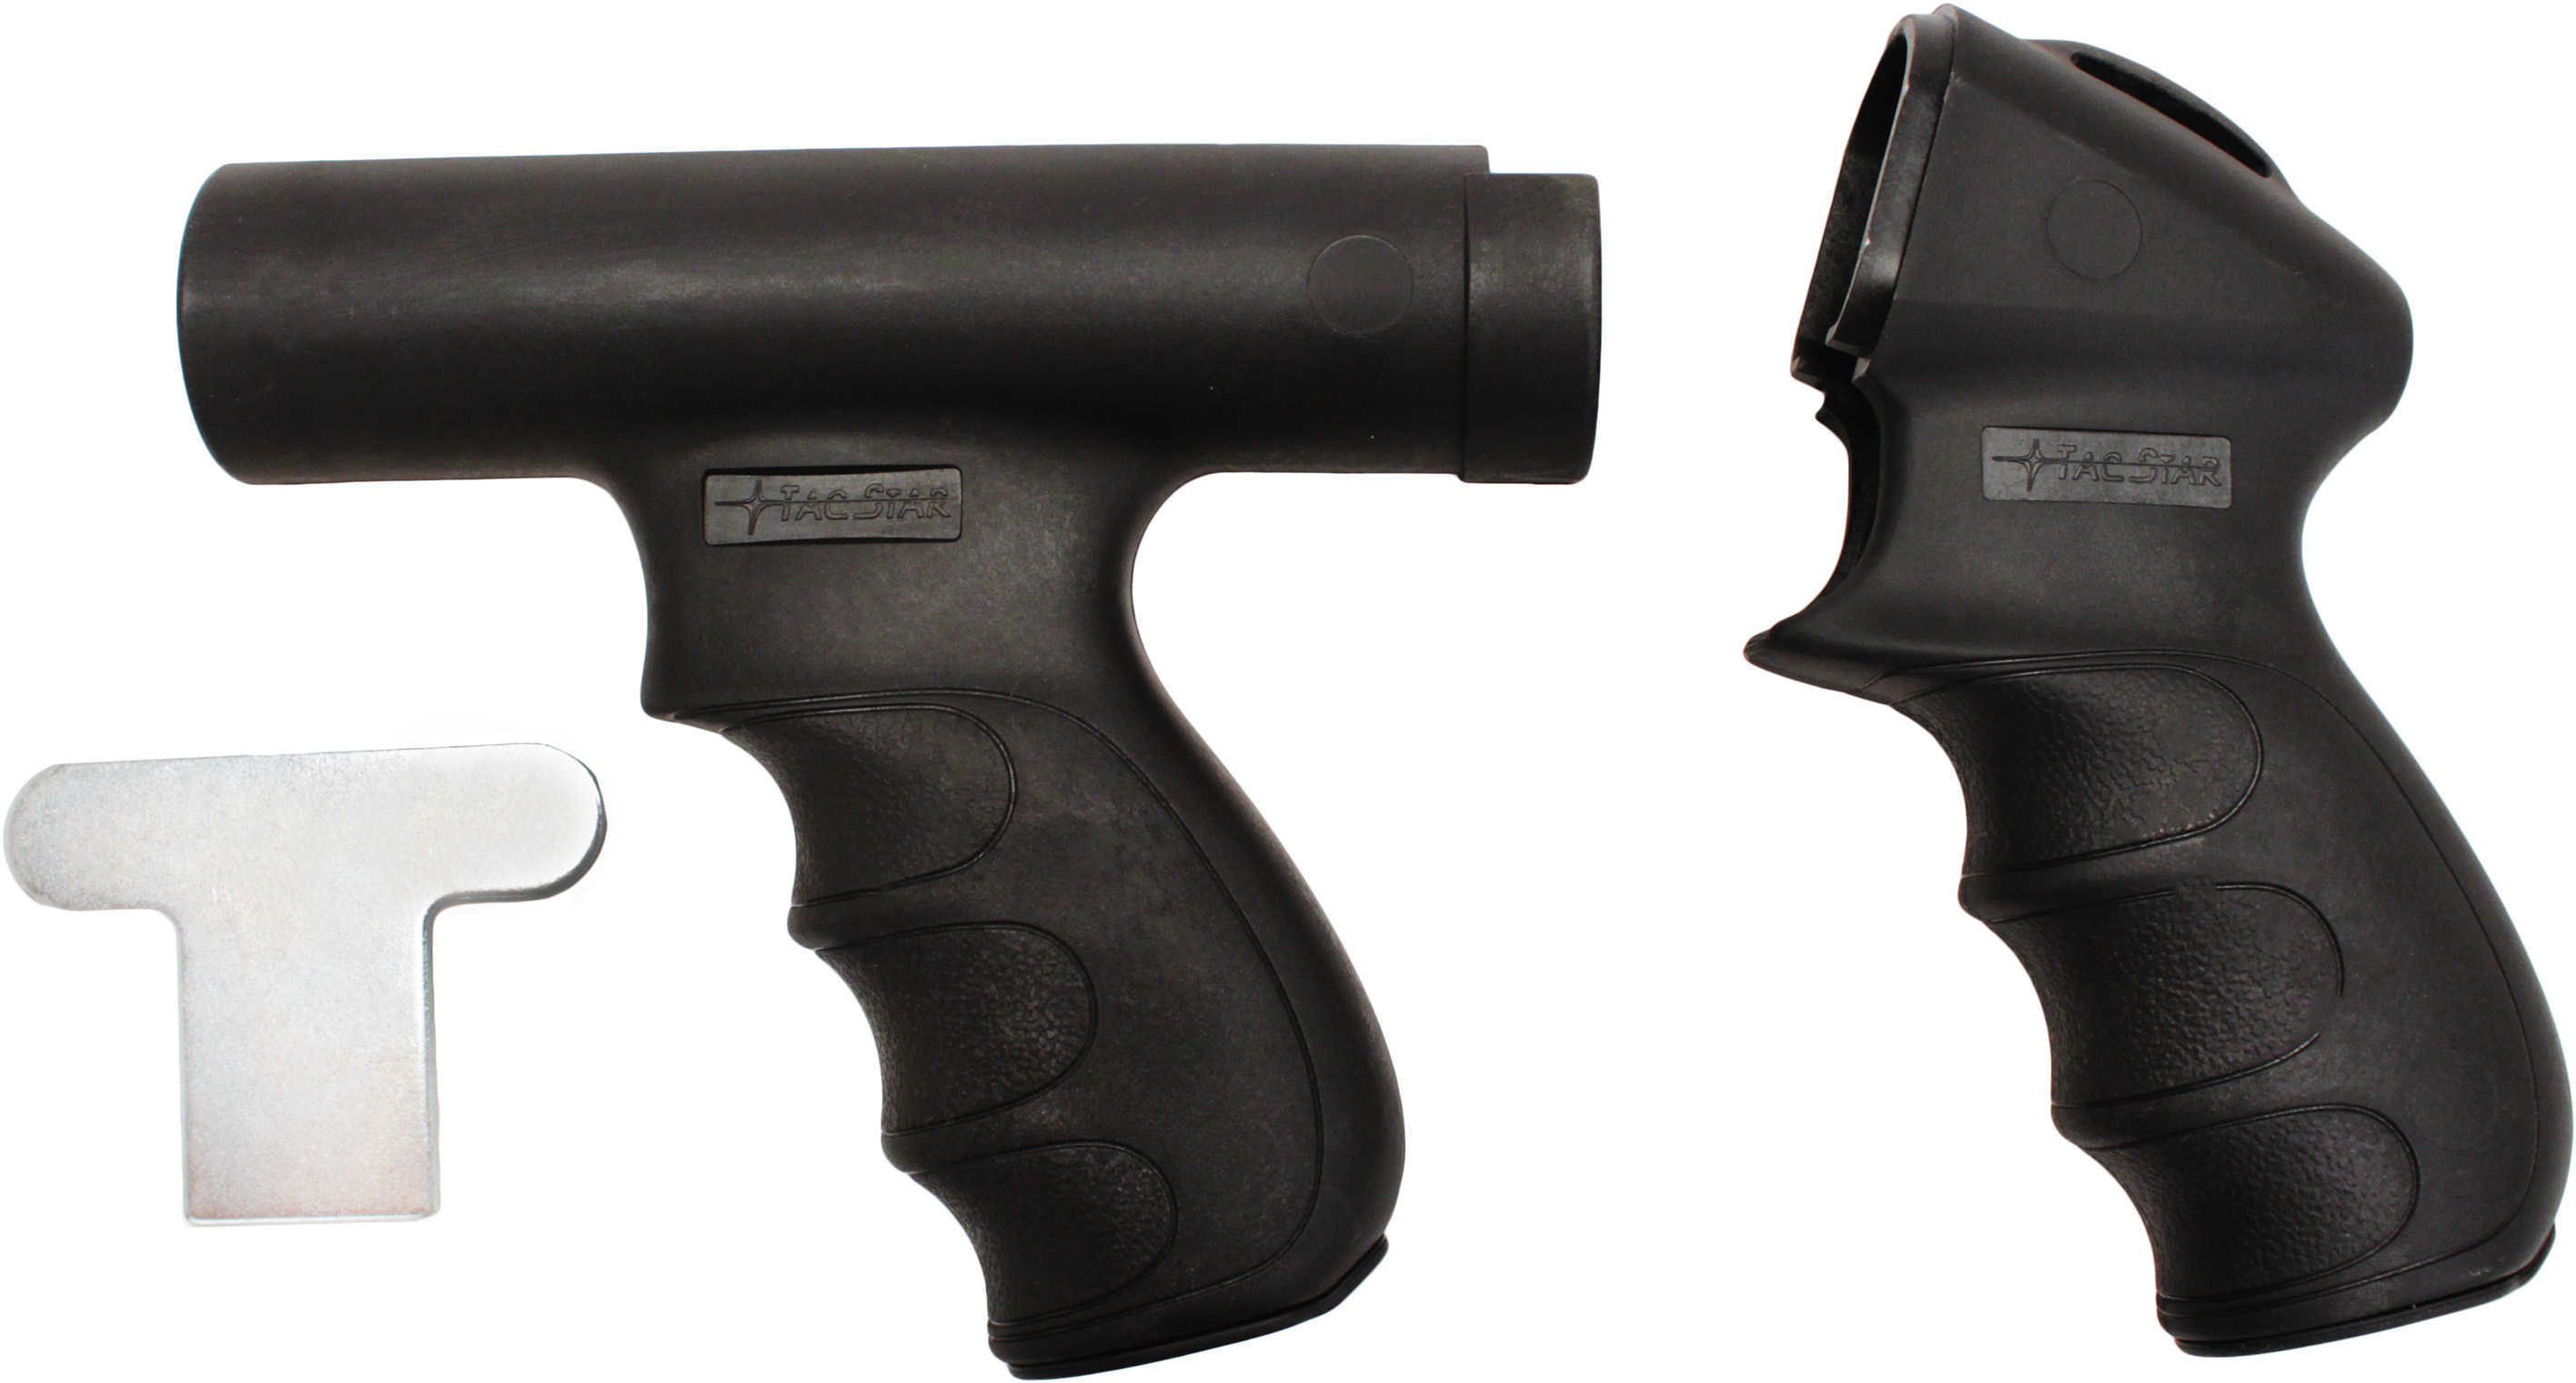 TacStar Industries Front & Rear Grip Set Remington Md: 1081149